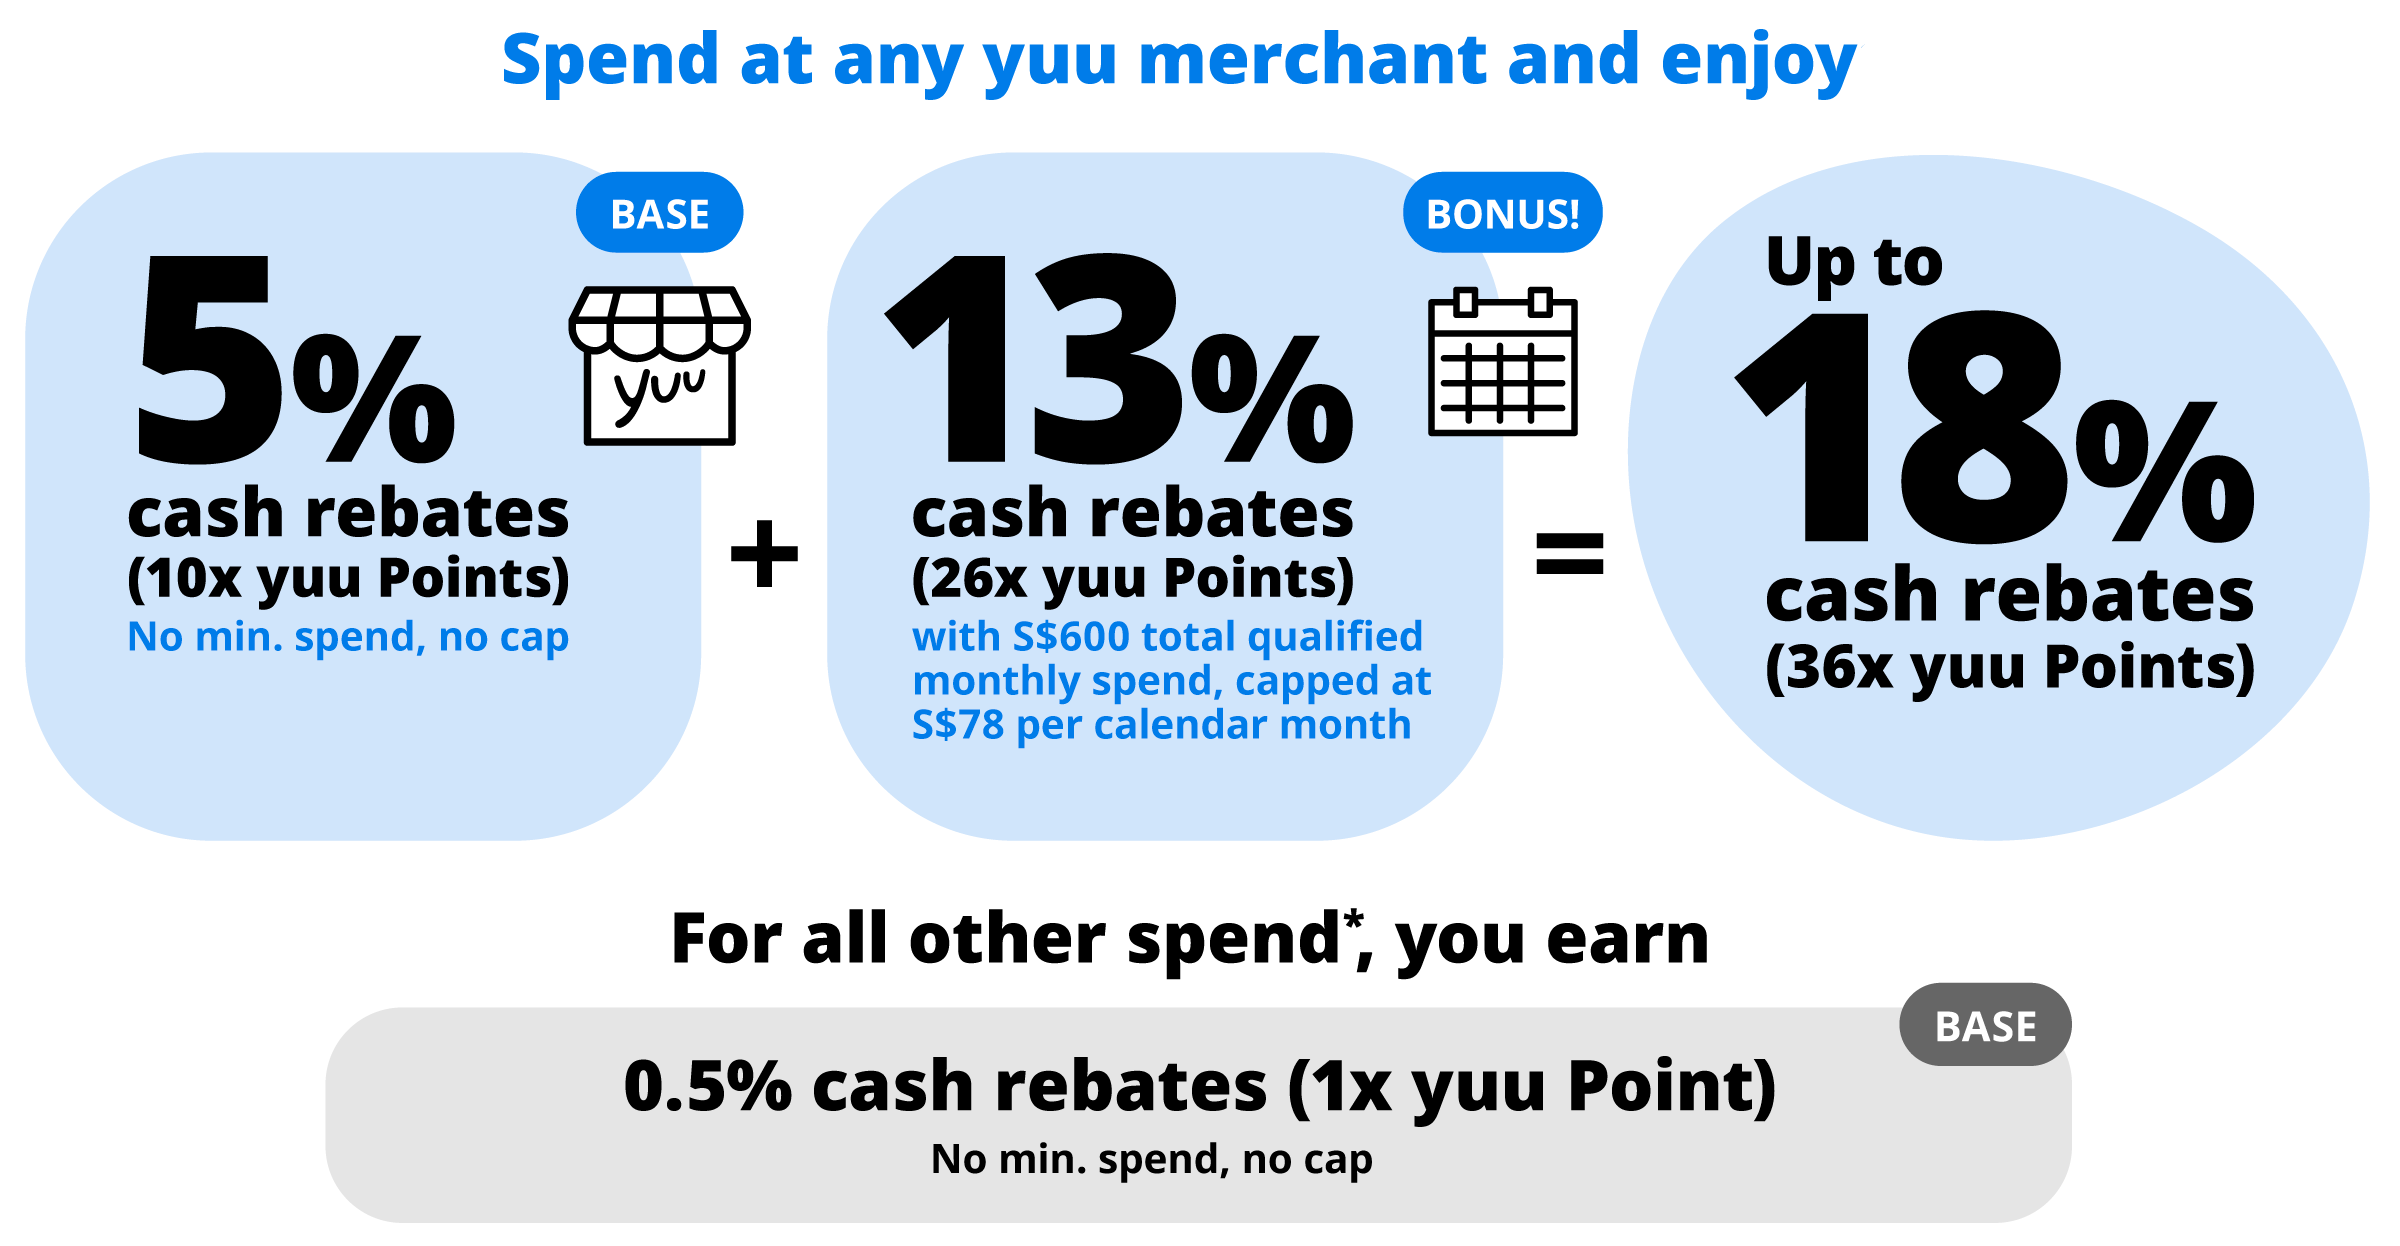 DBS yuu card cash rebates info